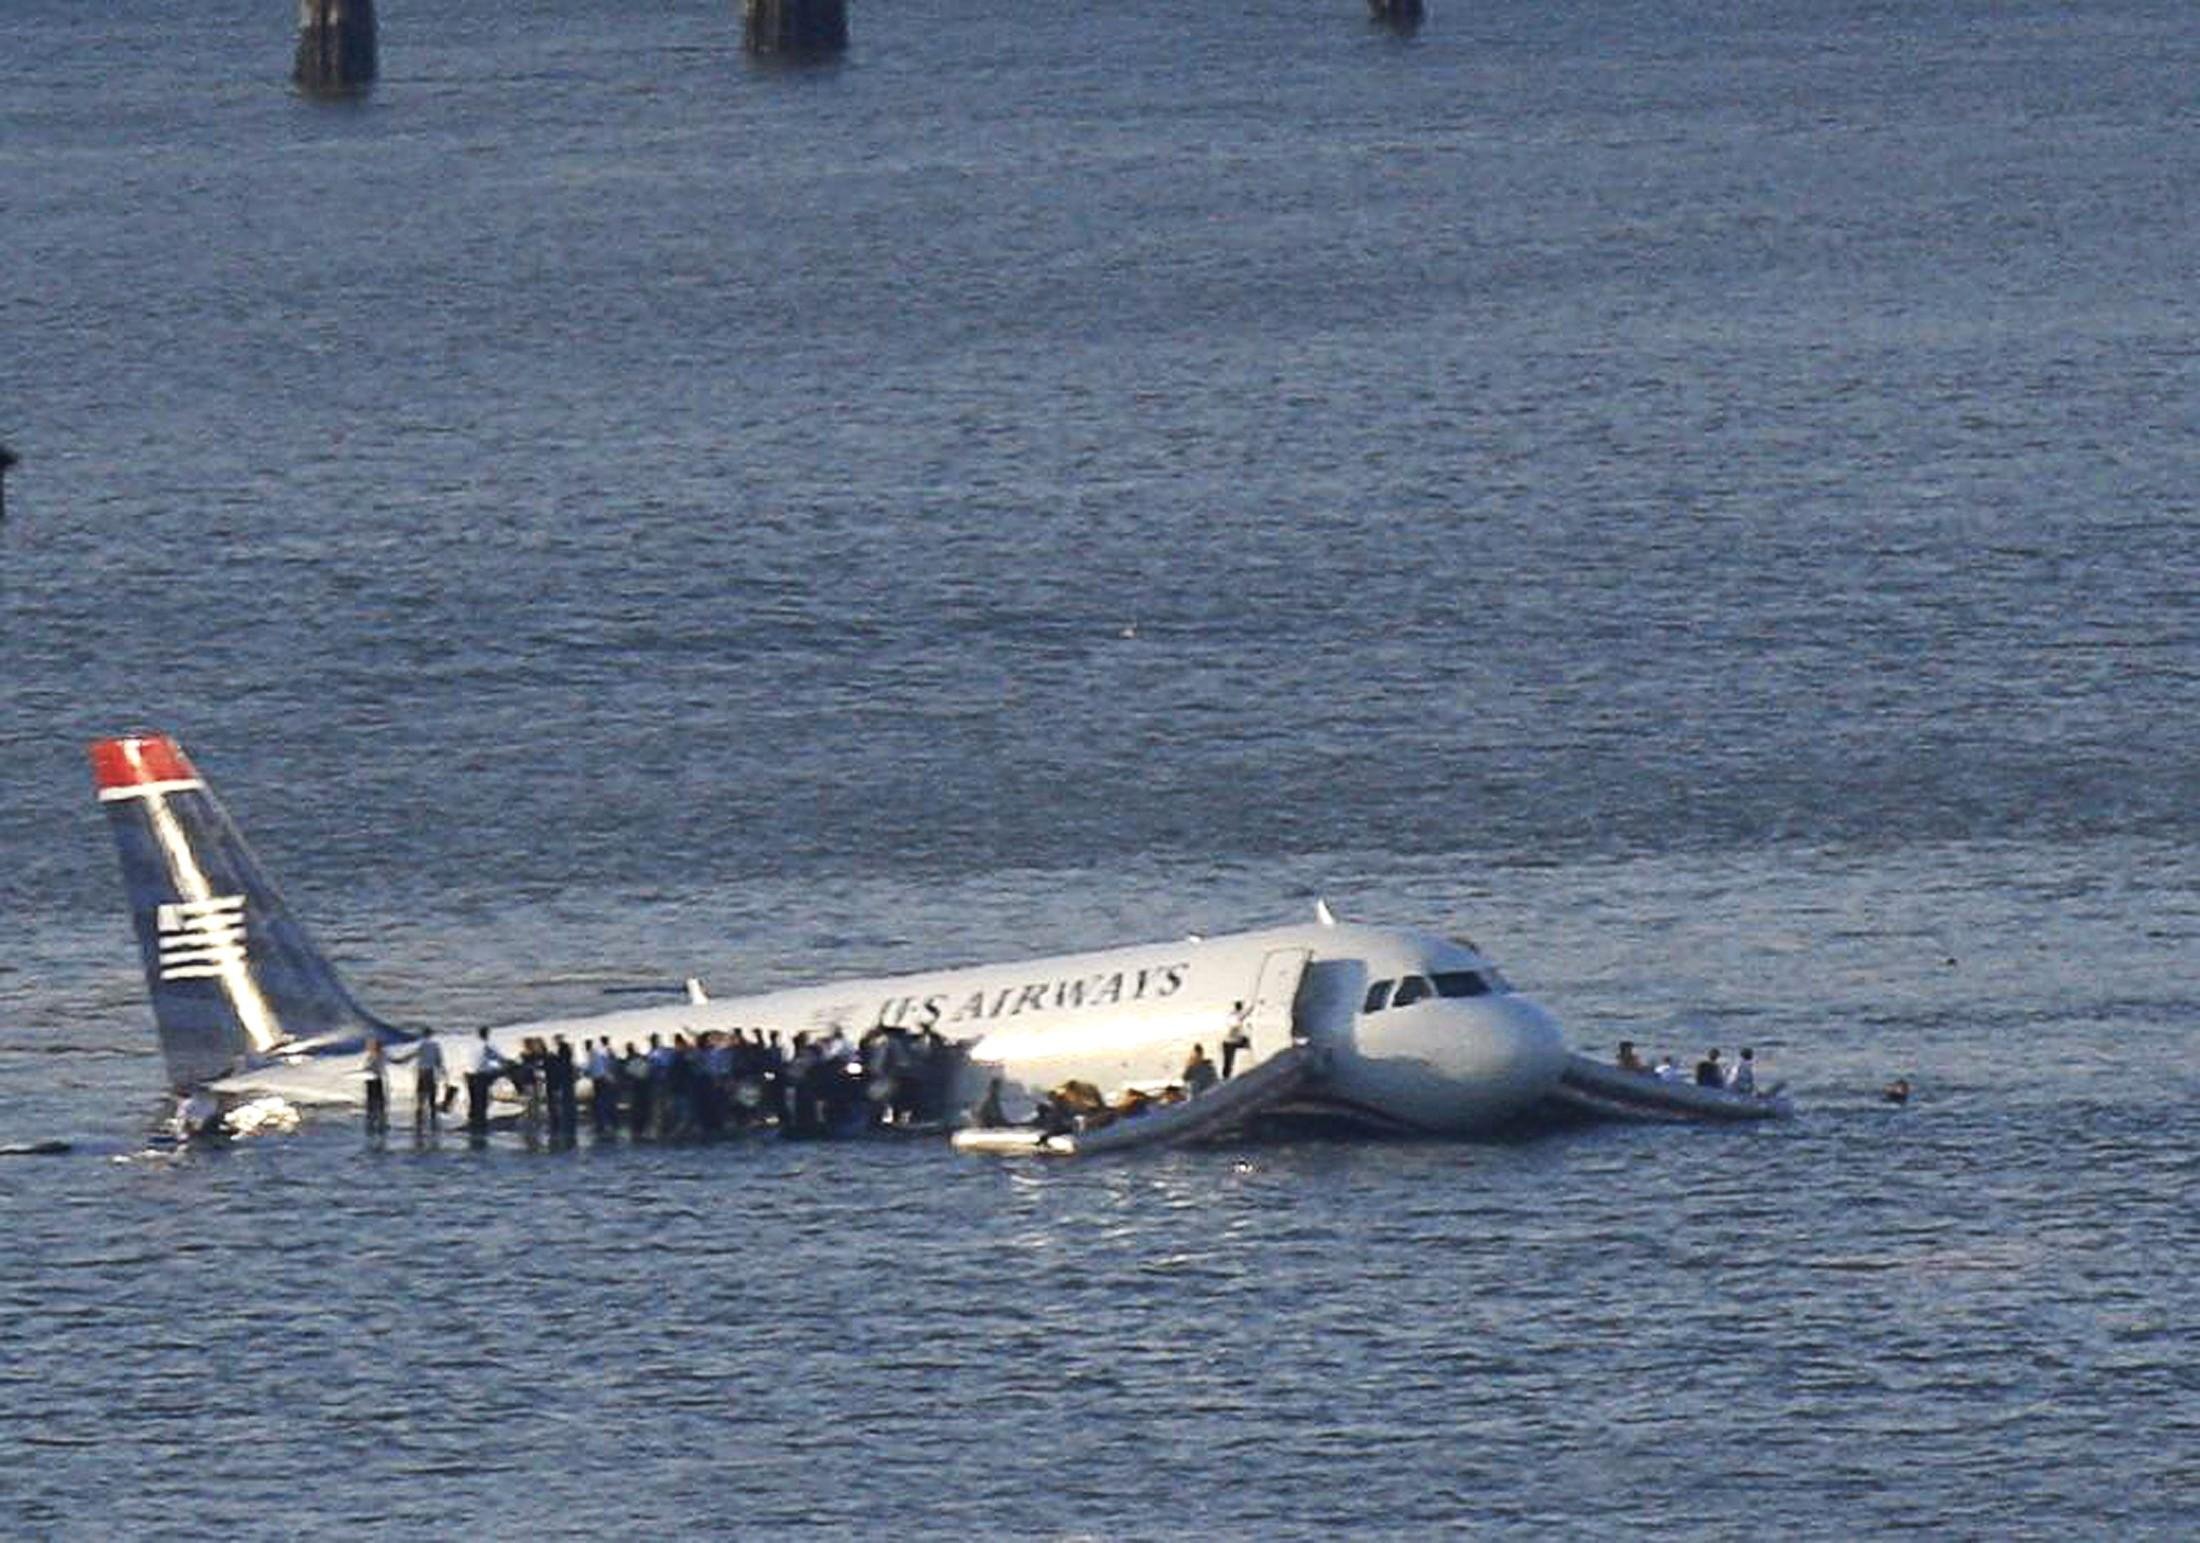 Hudson river plane crash. Аварийная посадка a320 на Гудзон. Гудзон 15 января 2009. Airbus a320 Гудзон. Самолёт на Гудзоне 2009.